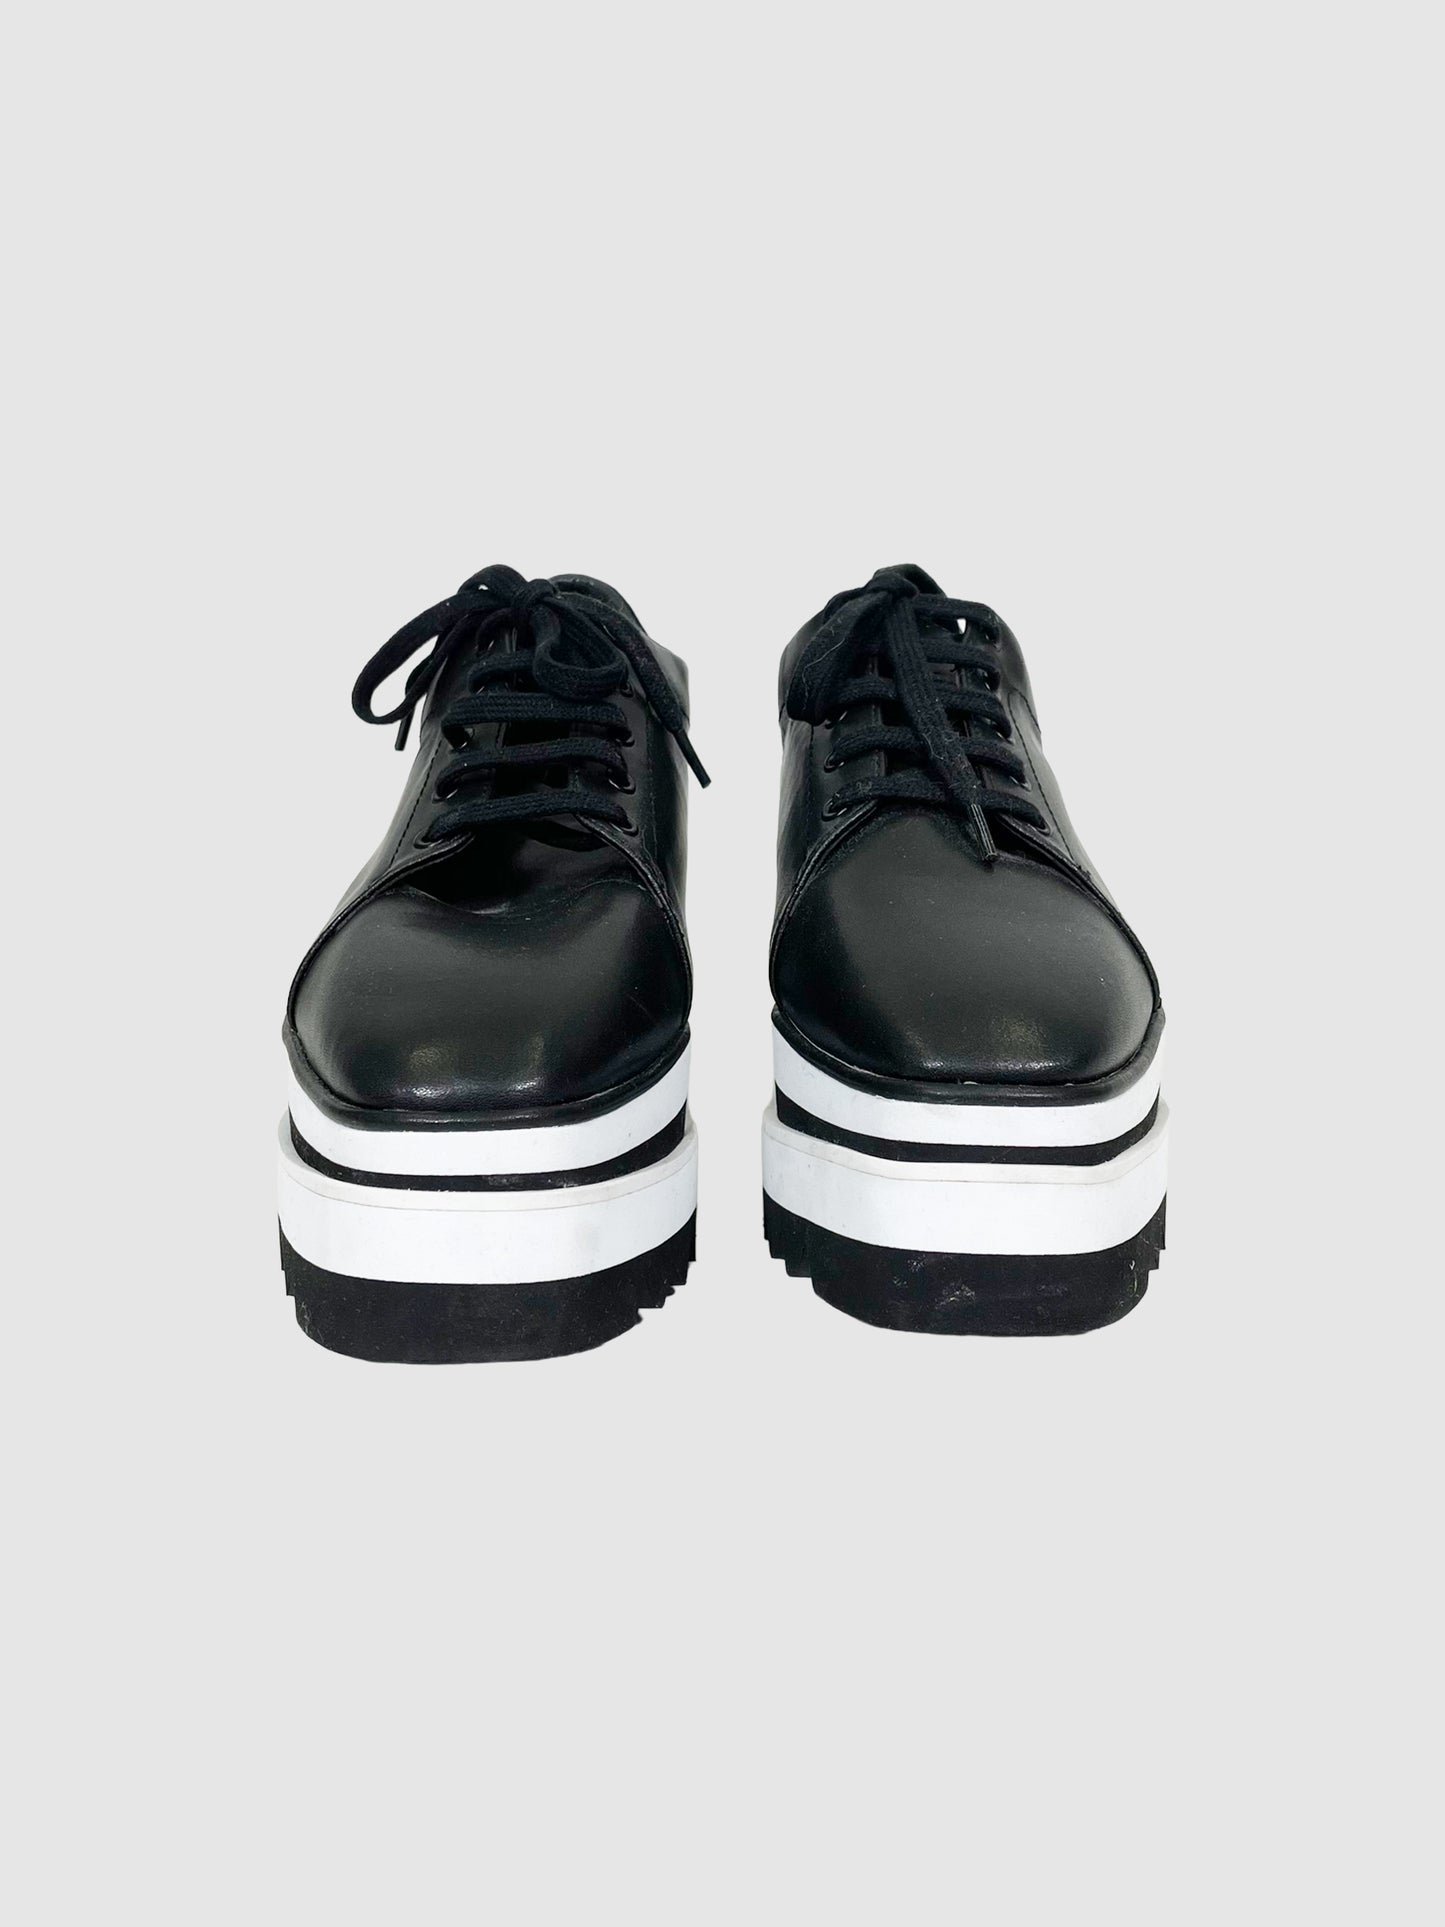 Stella McCartney "Elyse" Platform Sneakers - Size 37